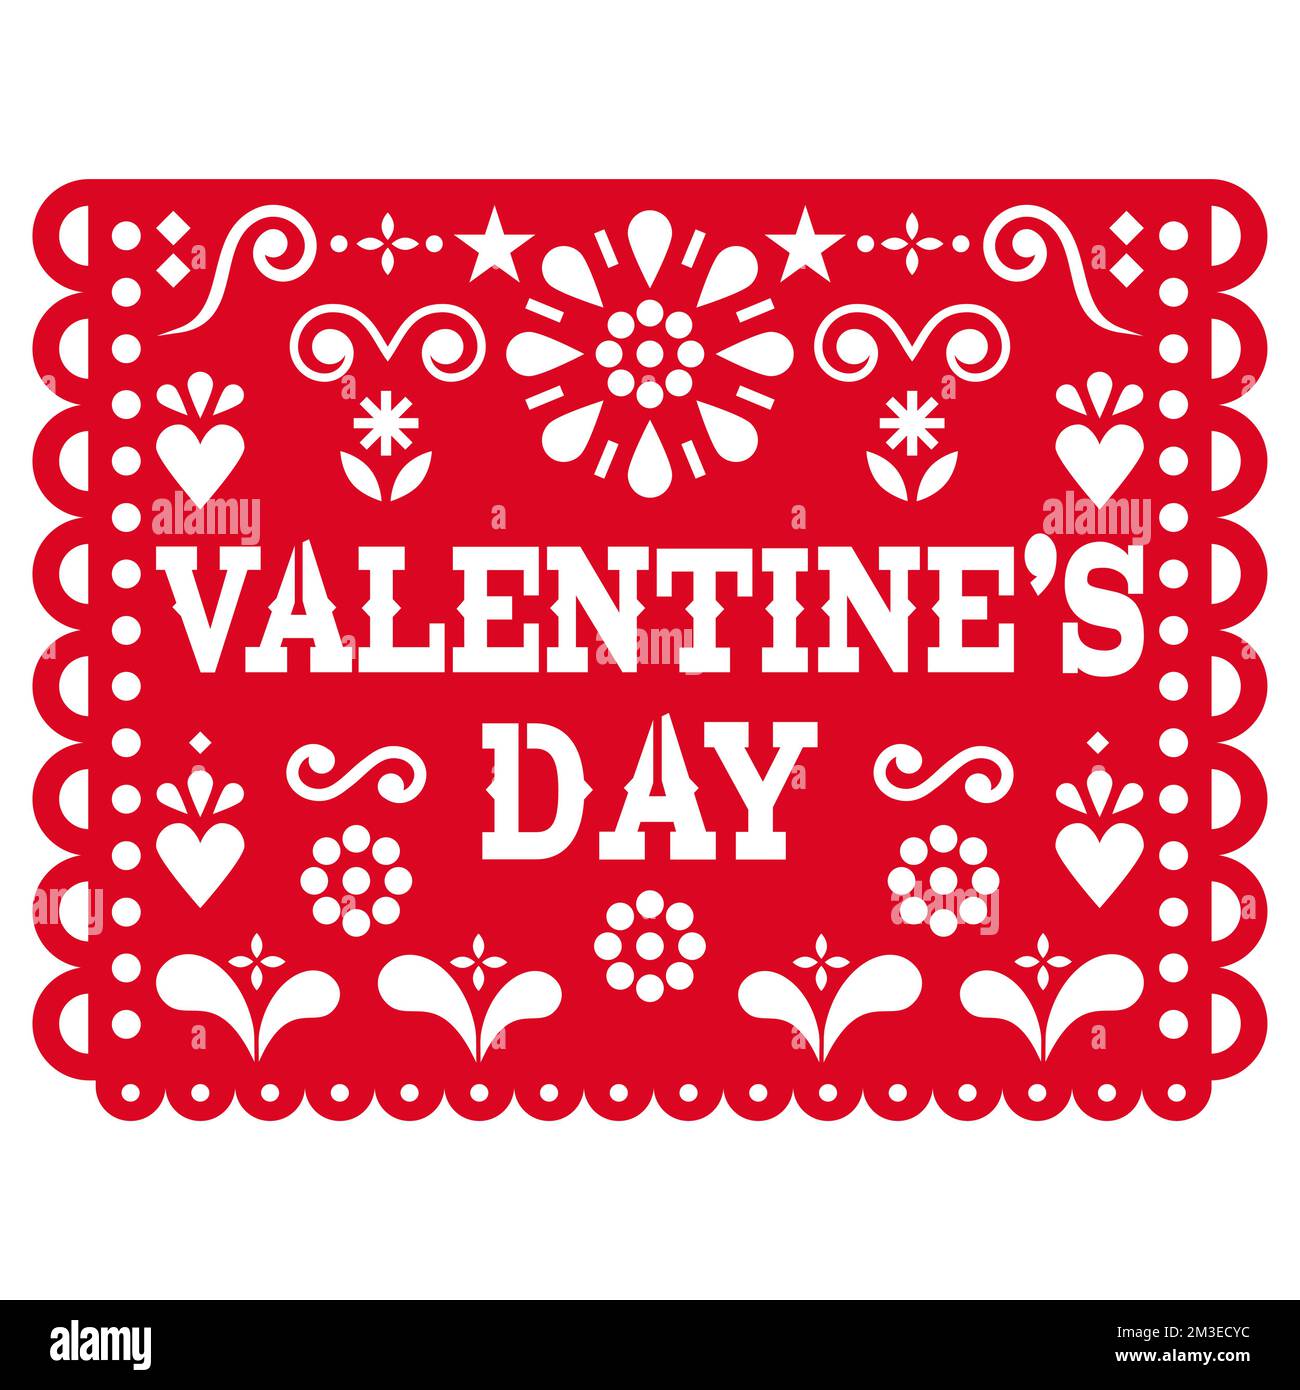 v]Valentine's Day Papel Picado - Mexican paper cutout decoration vector design, fiesta decoration garland Stock Vector